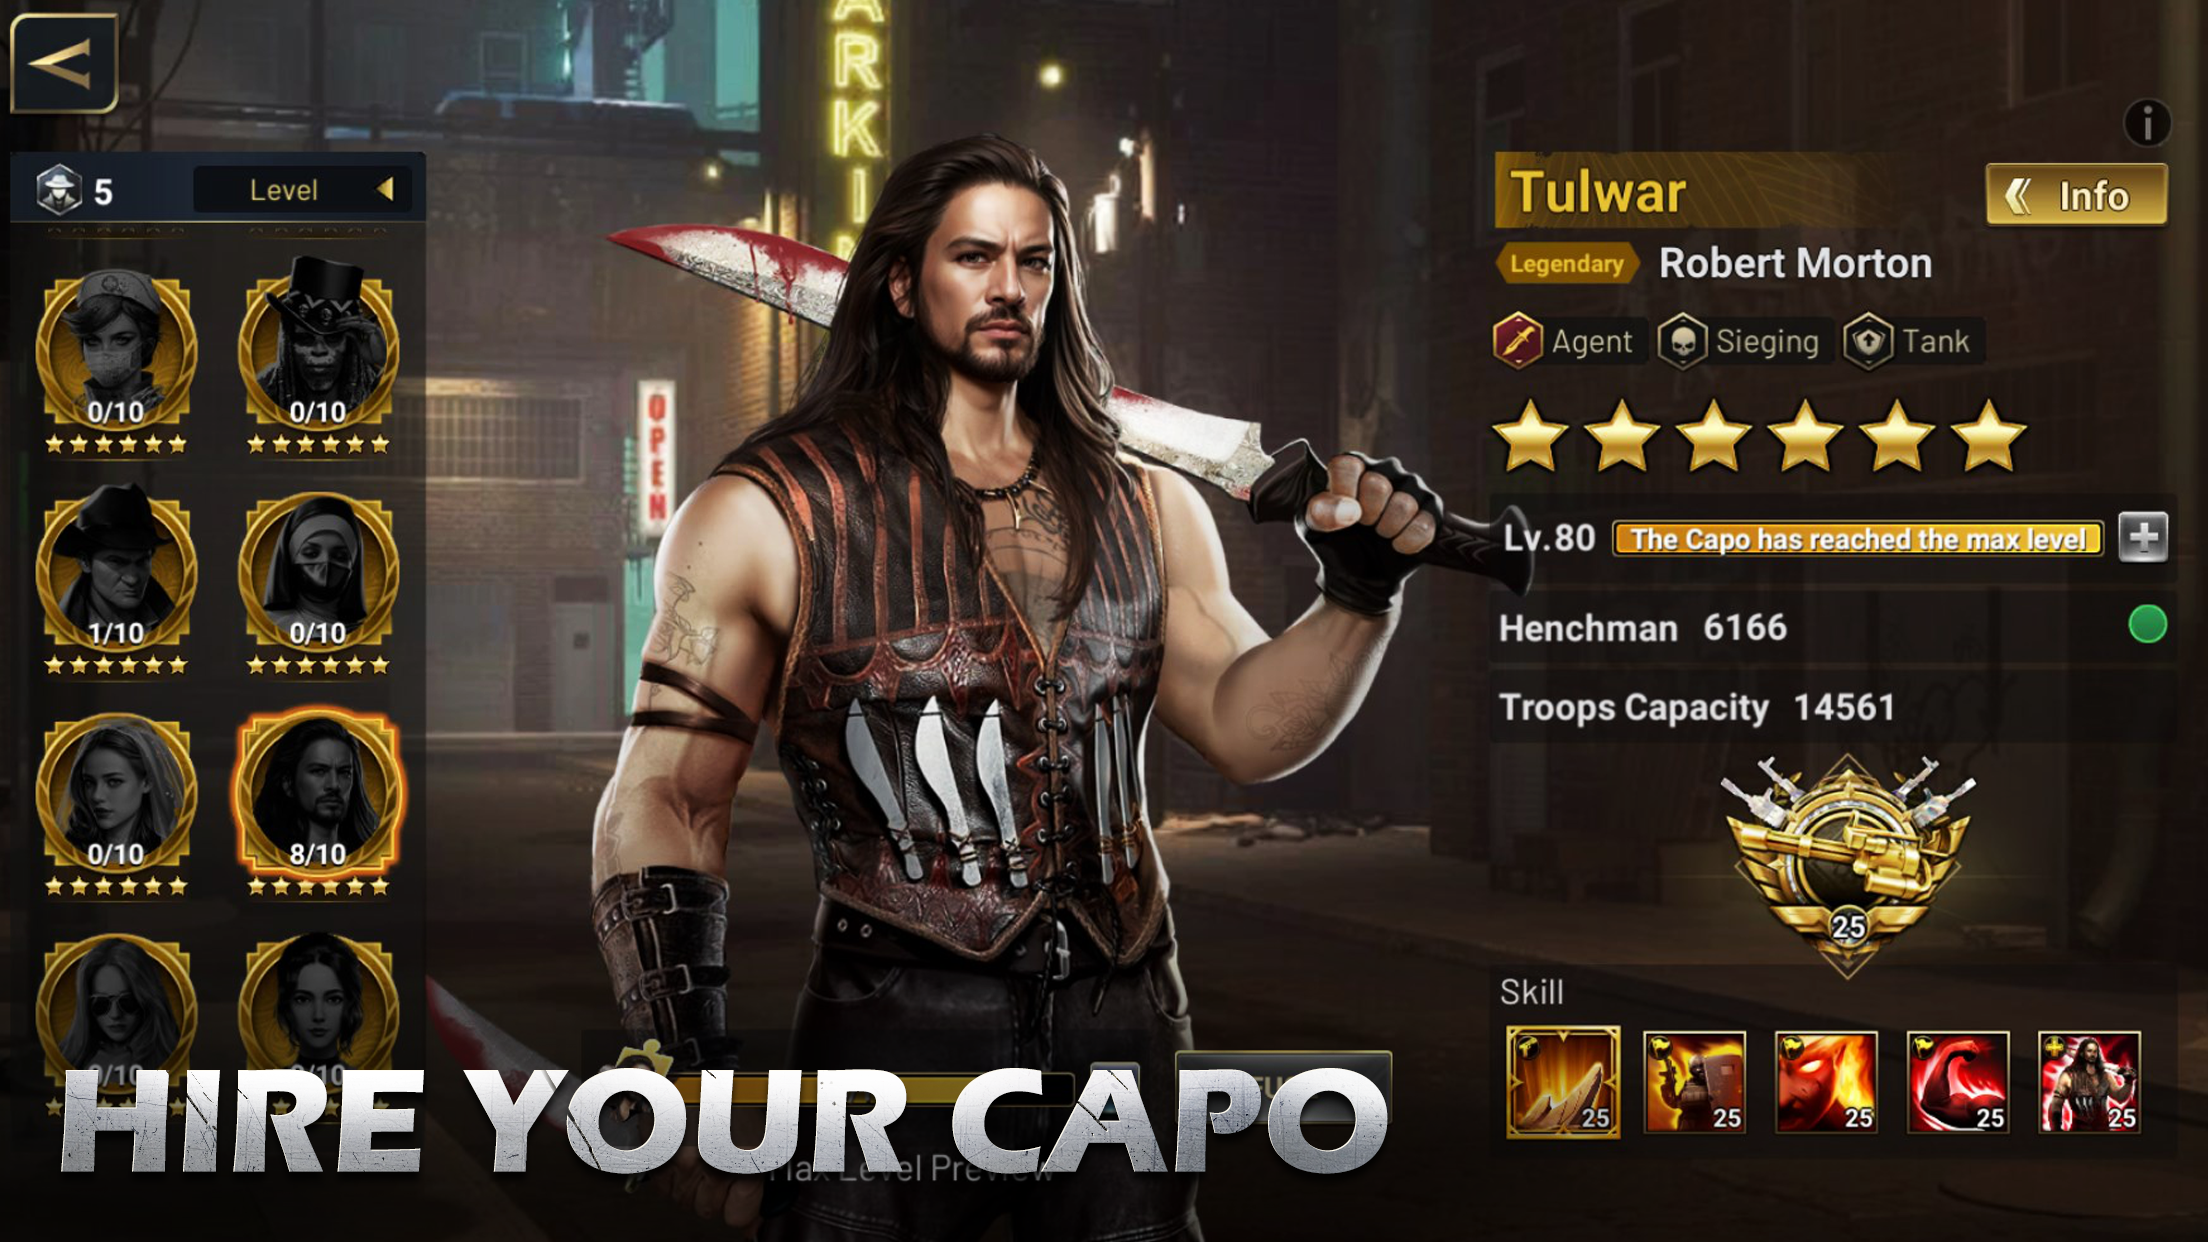 War Elite: City Survival screenshot game